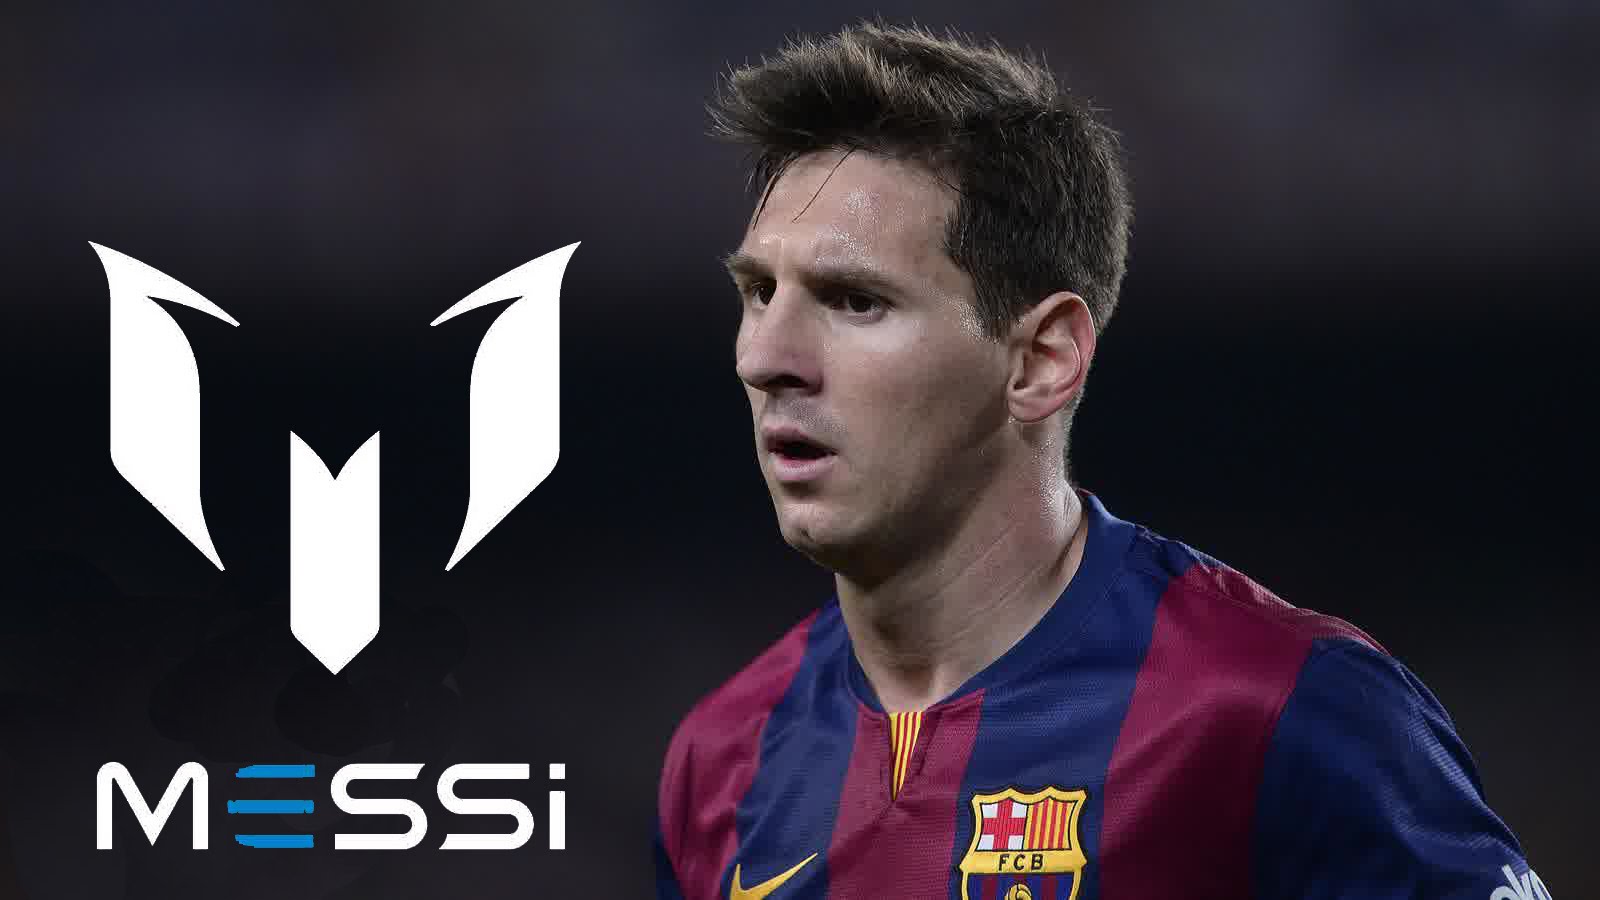 Messi Wallpaper Hd - Lionel Messi - HD Wallpaper 